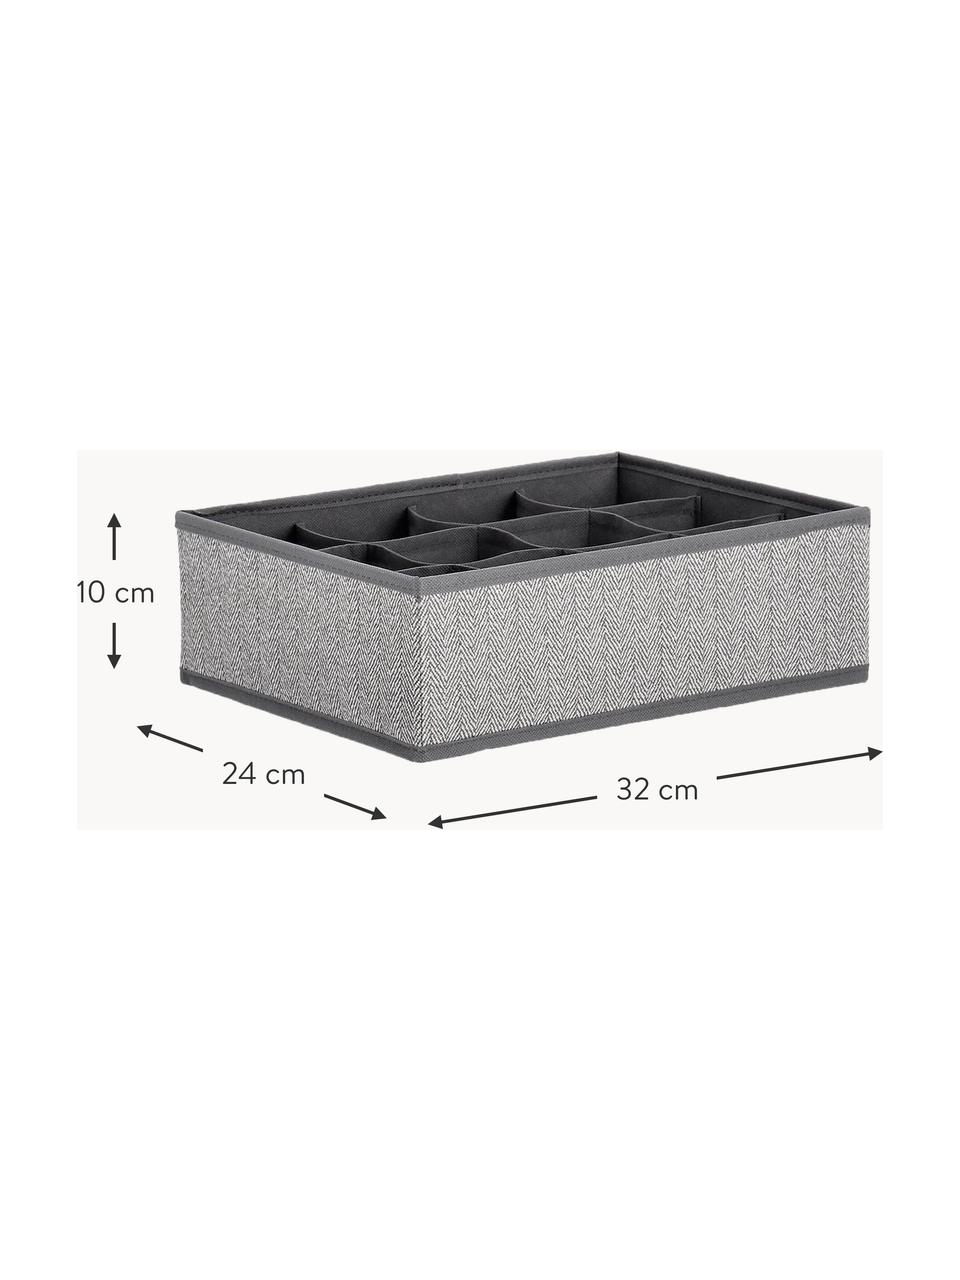 Skladovací box Tidy, T 32 cm, Umělé vlákno, Odstíny šedé, Š 32 cm, H 24 cm